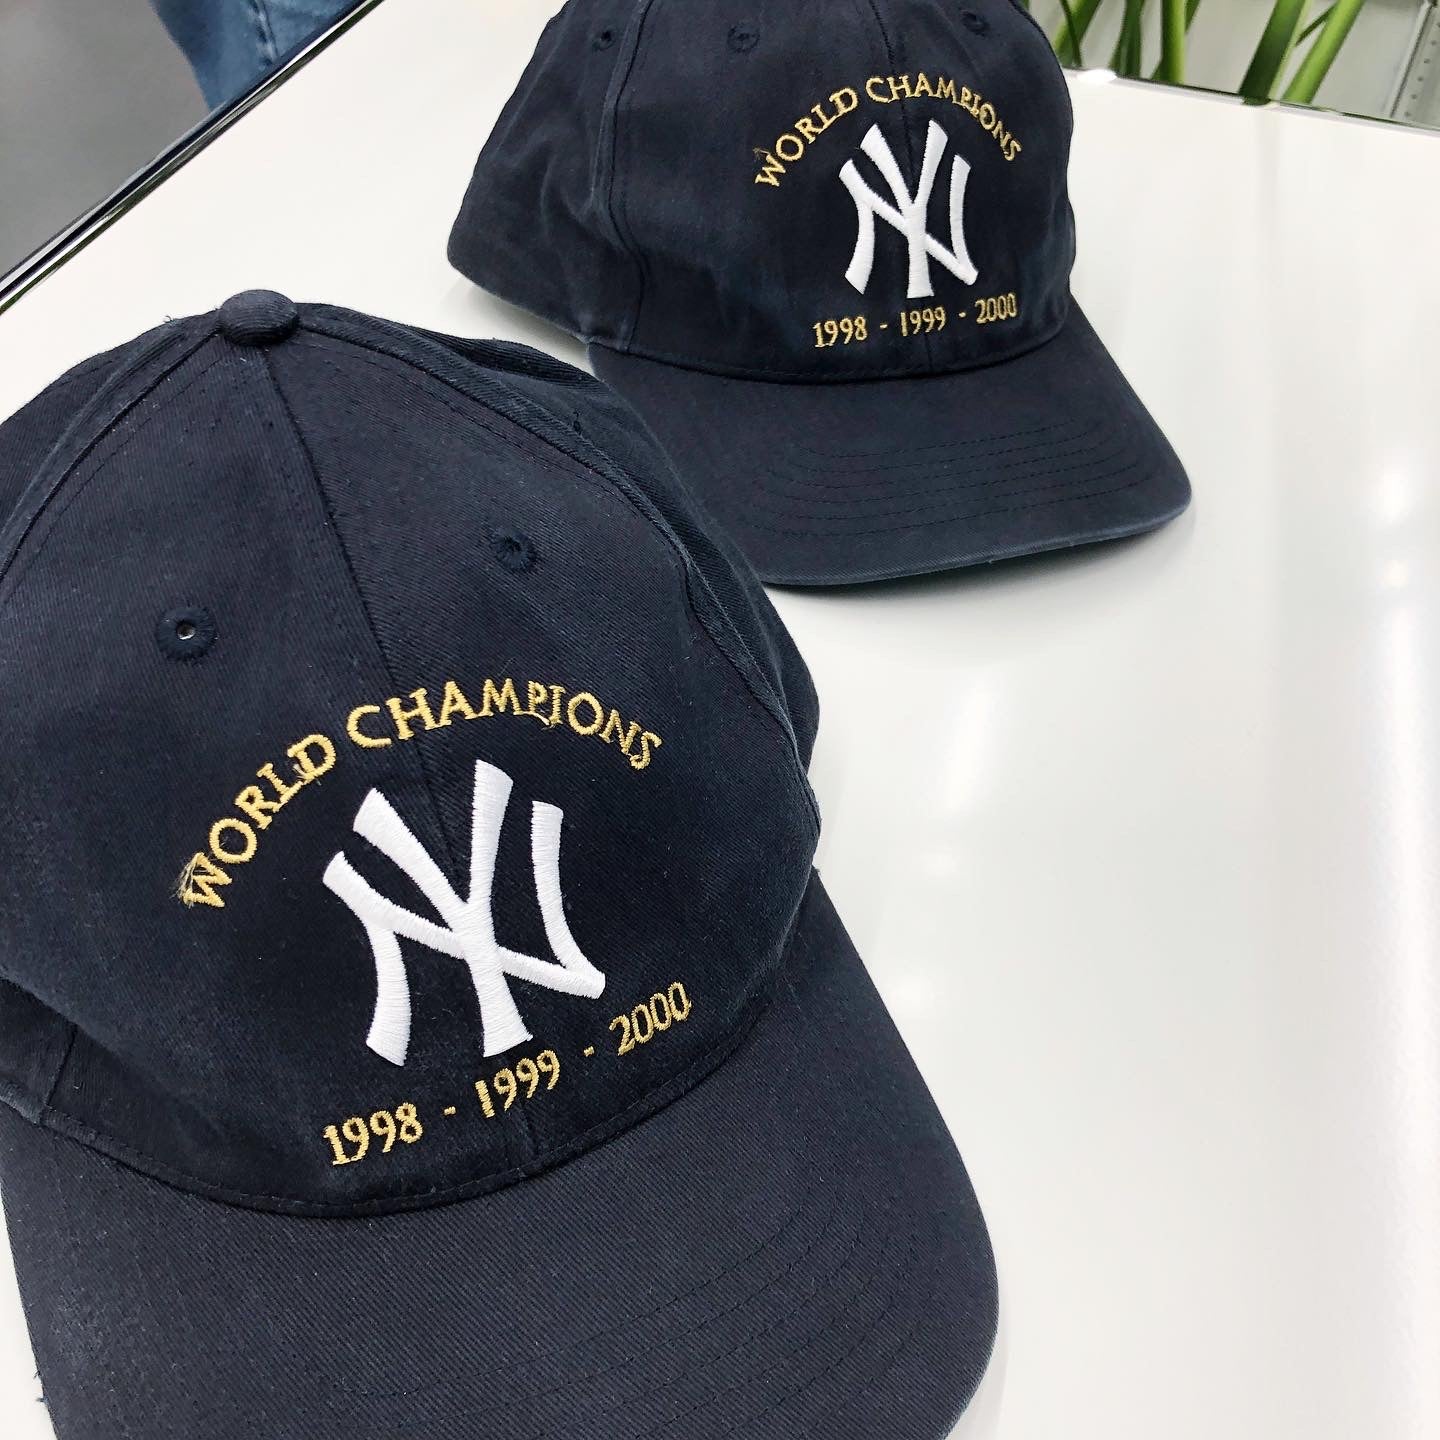 New York Yankees World Champions Snapback Cap